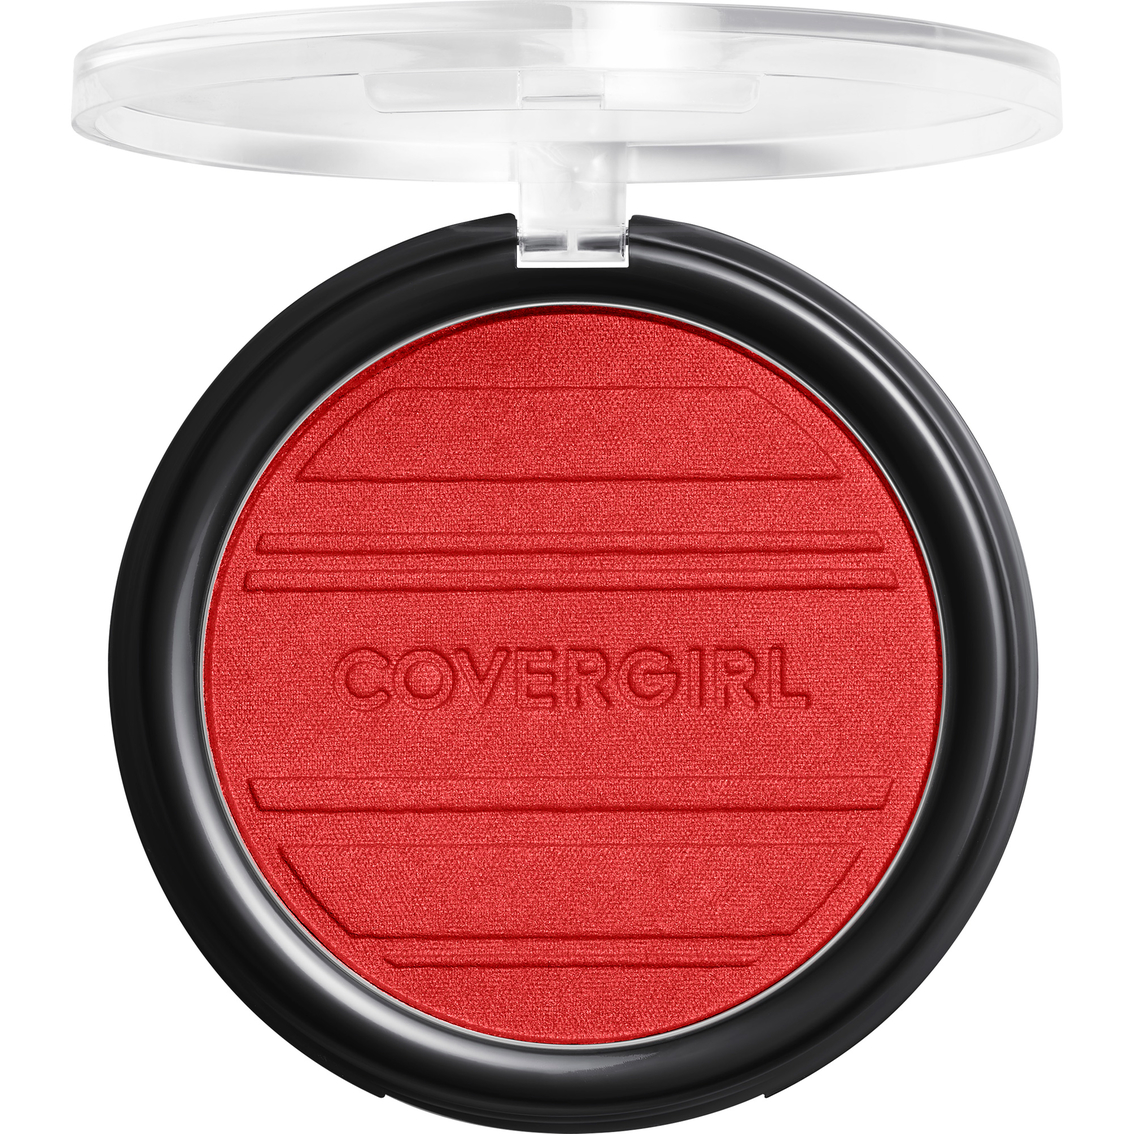 CoverGirl TruBlend Hi Pigment Blush - Image 2 of 4